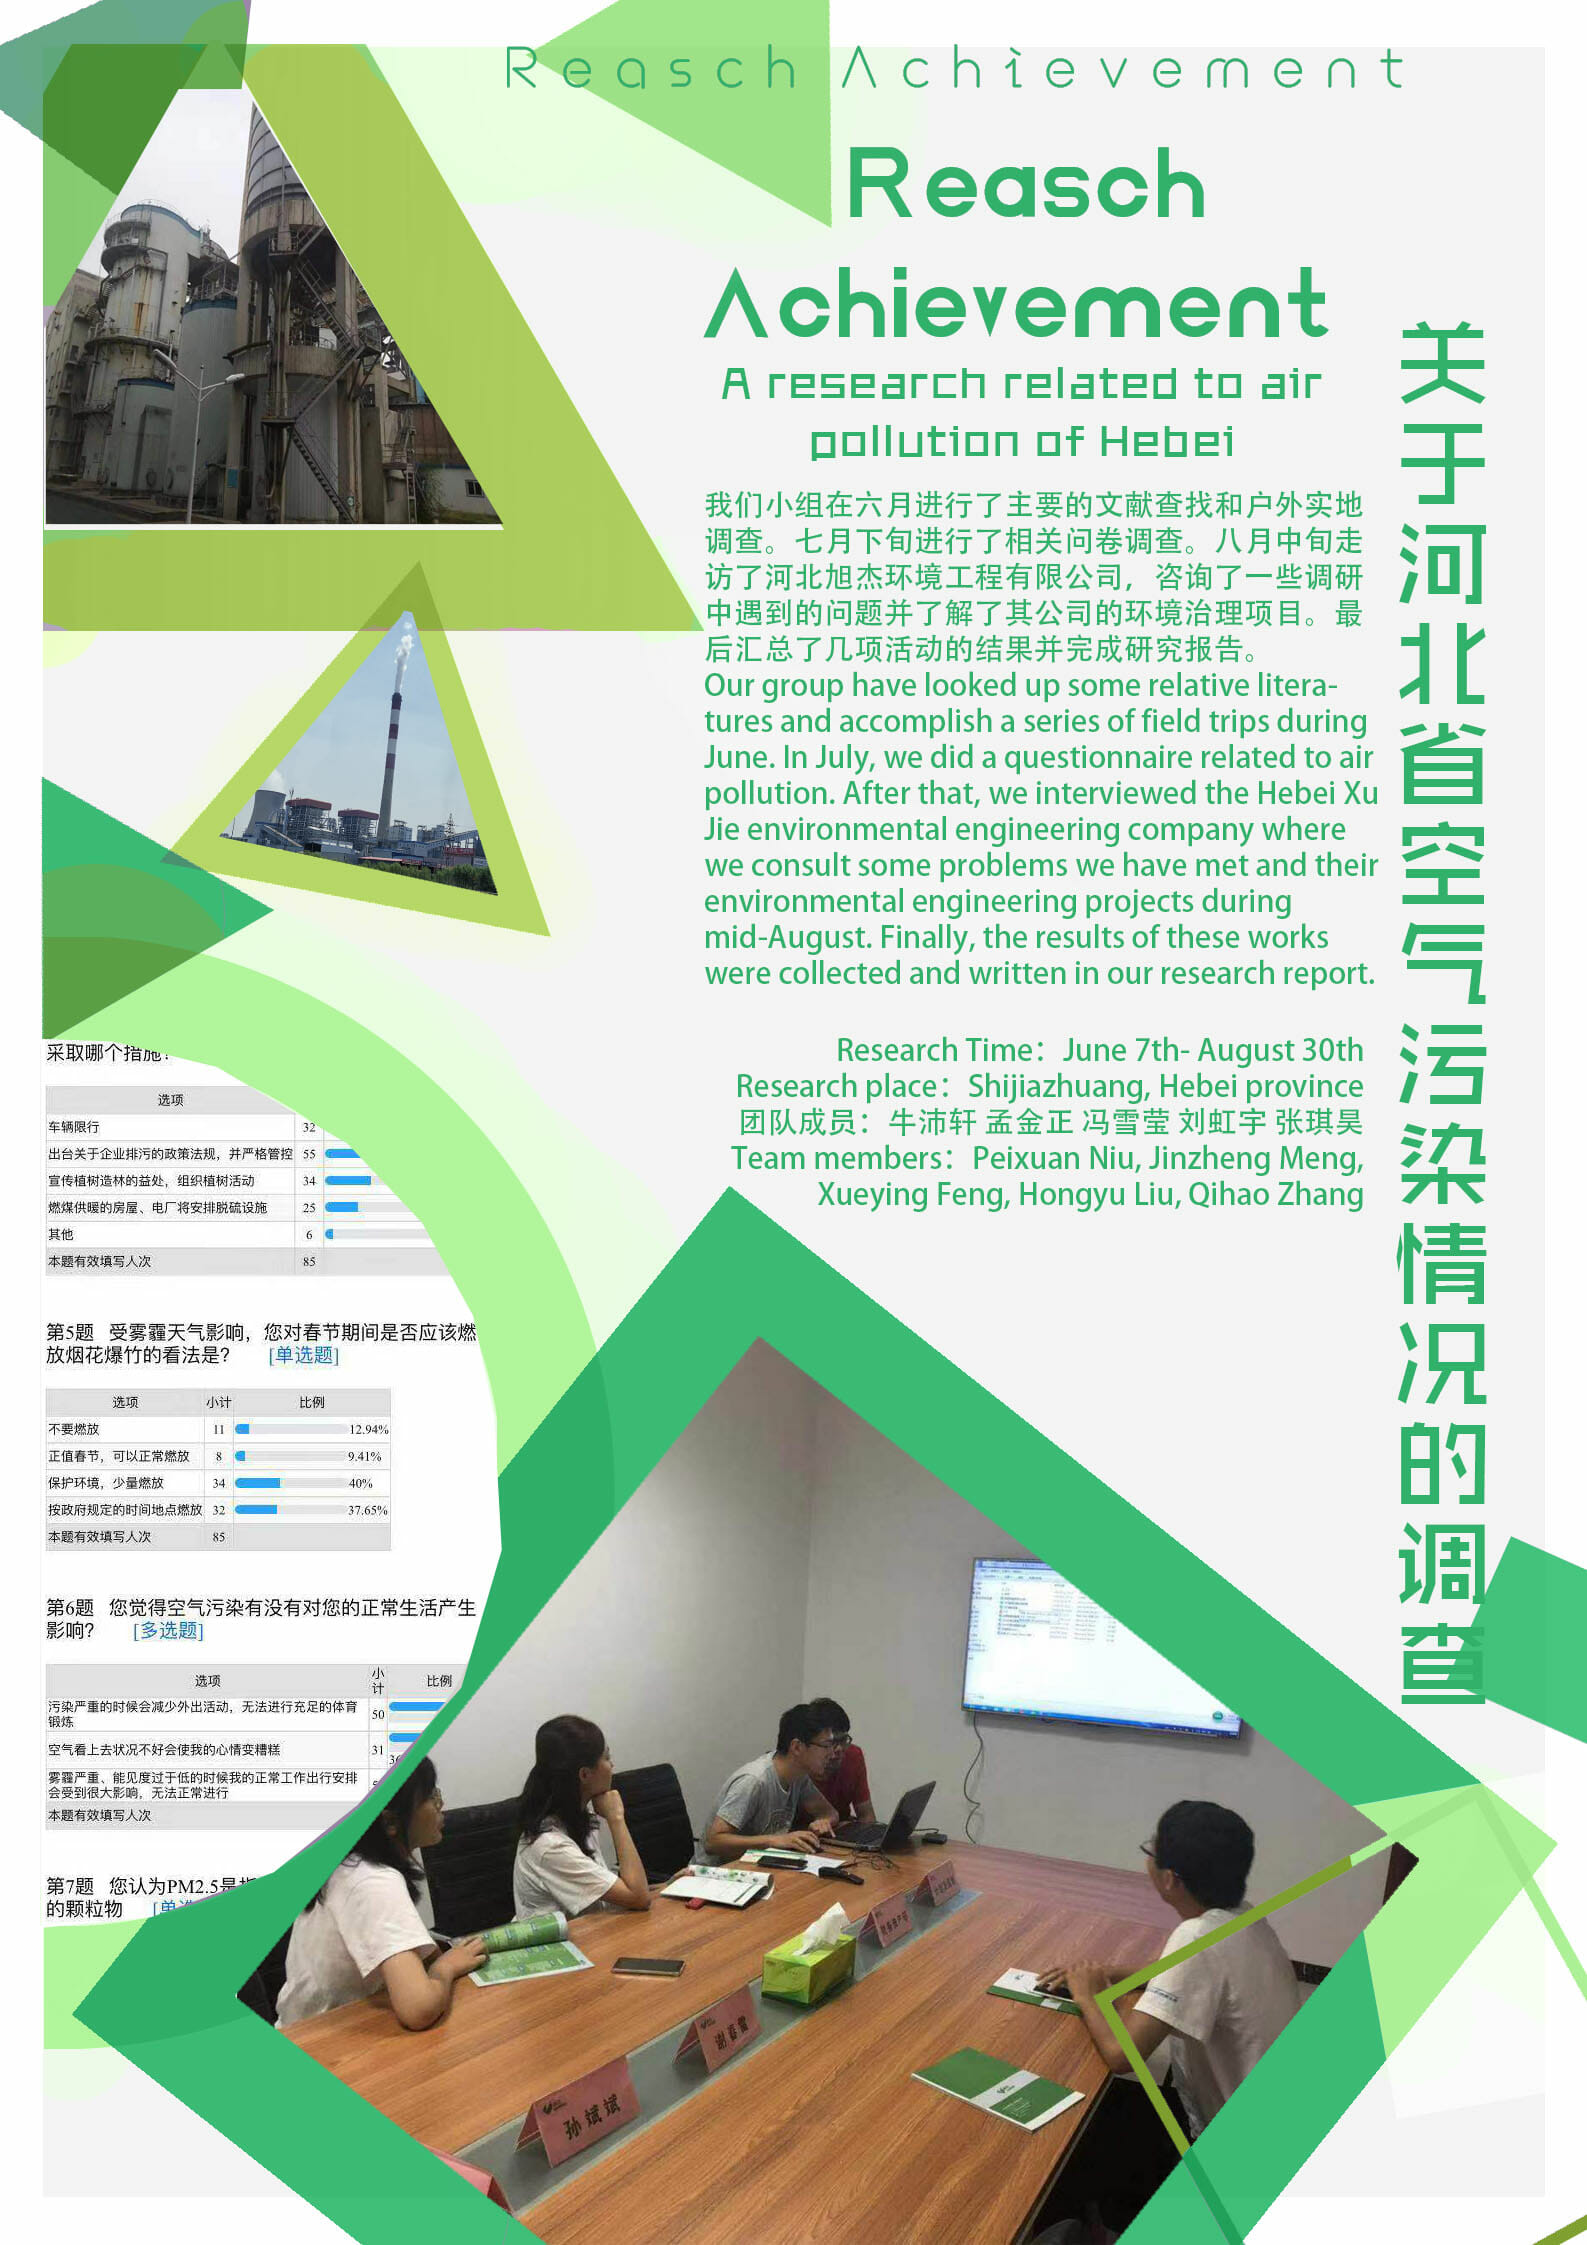 牛沛轩-关于河北省空气污染情况的调查(A research related to air pollution of Hebei province).jpg